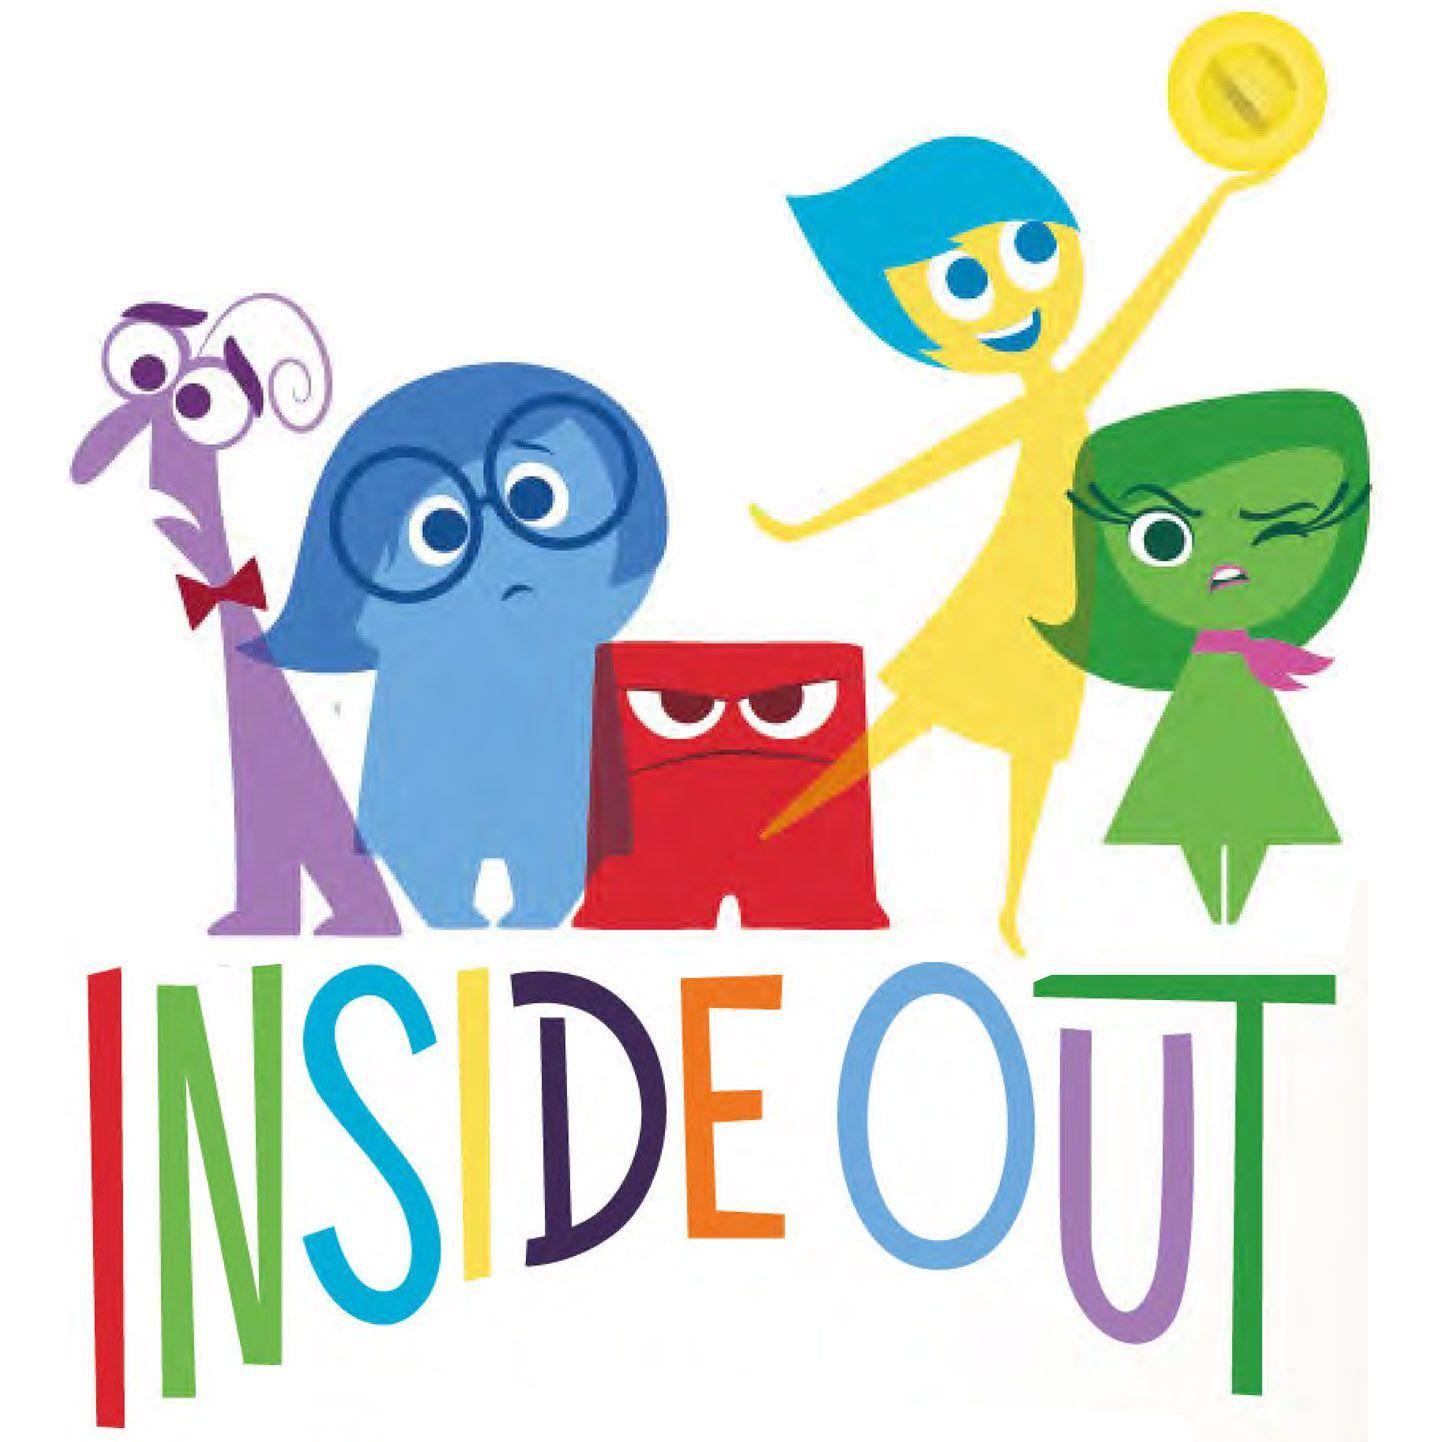 Disney Pixar Inside Out Logo - Pin by Dessa Rose on disney wallpaper | Pinterest | Disney, Pixar ...